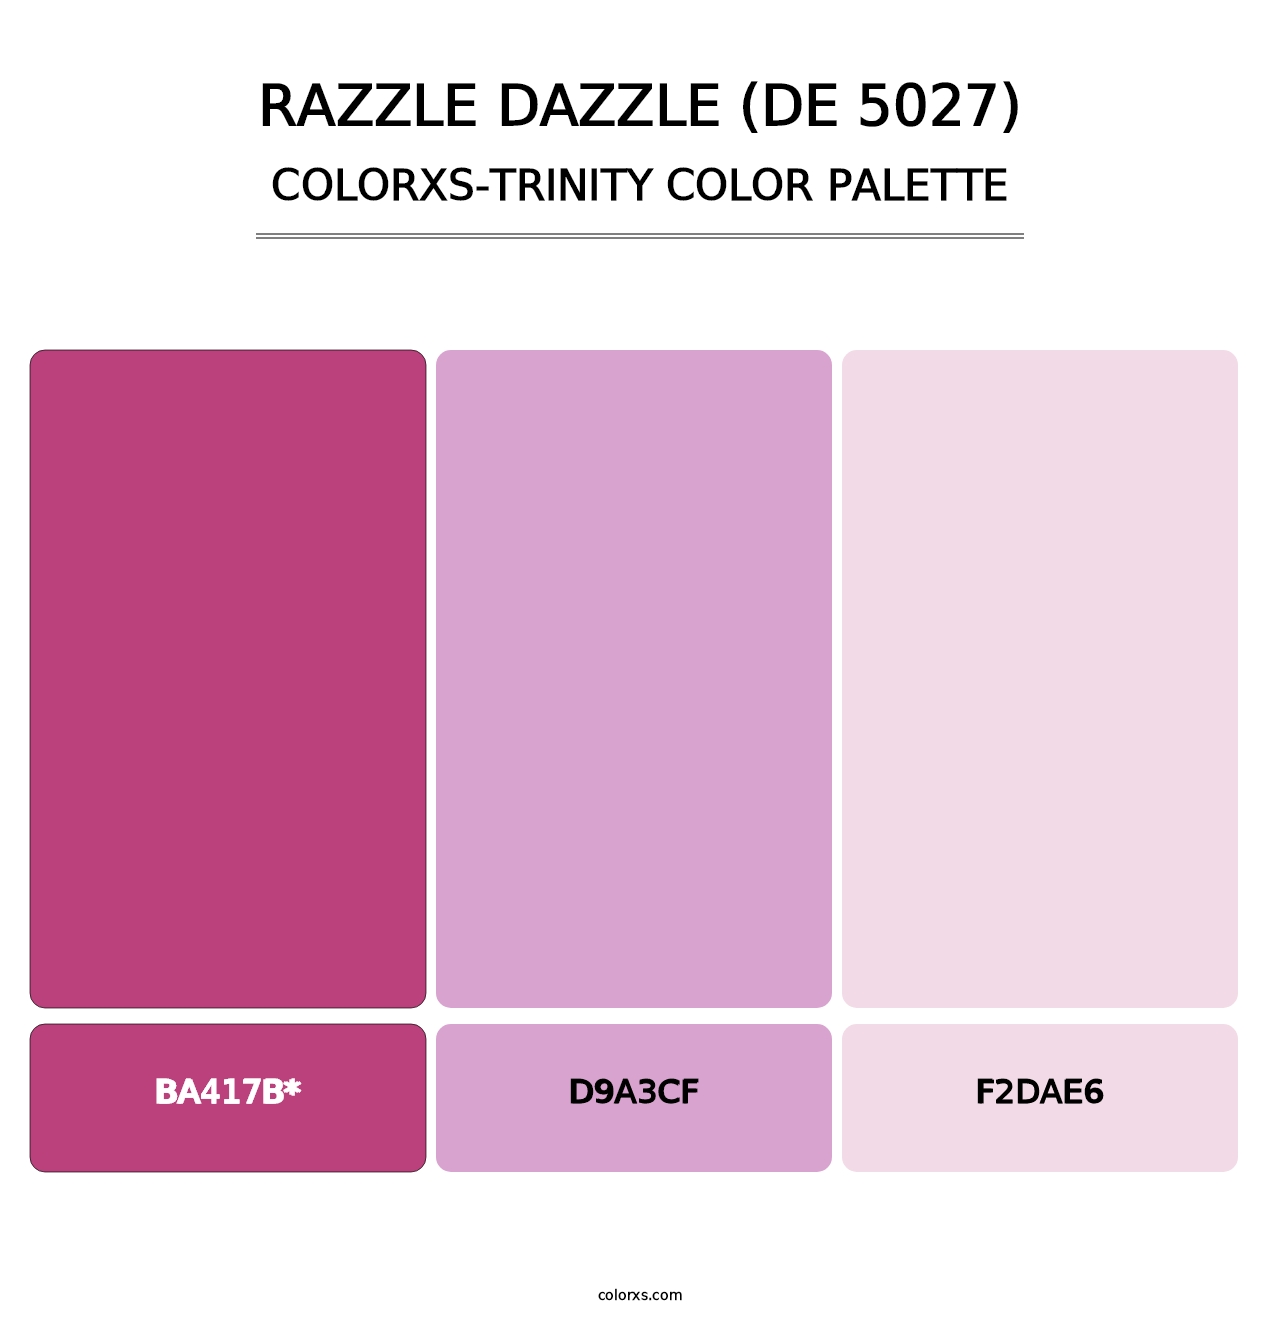 Razzle Dazzle (DE 5027) - Colorxs Trinity Palette